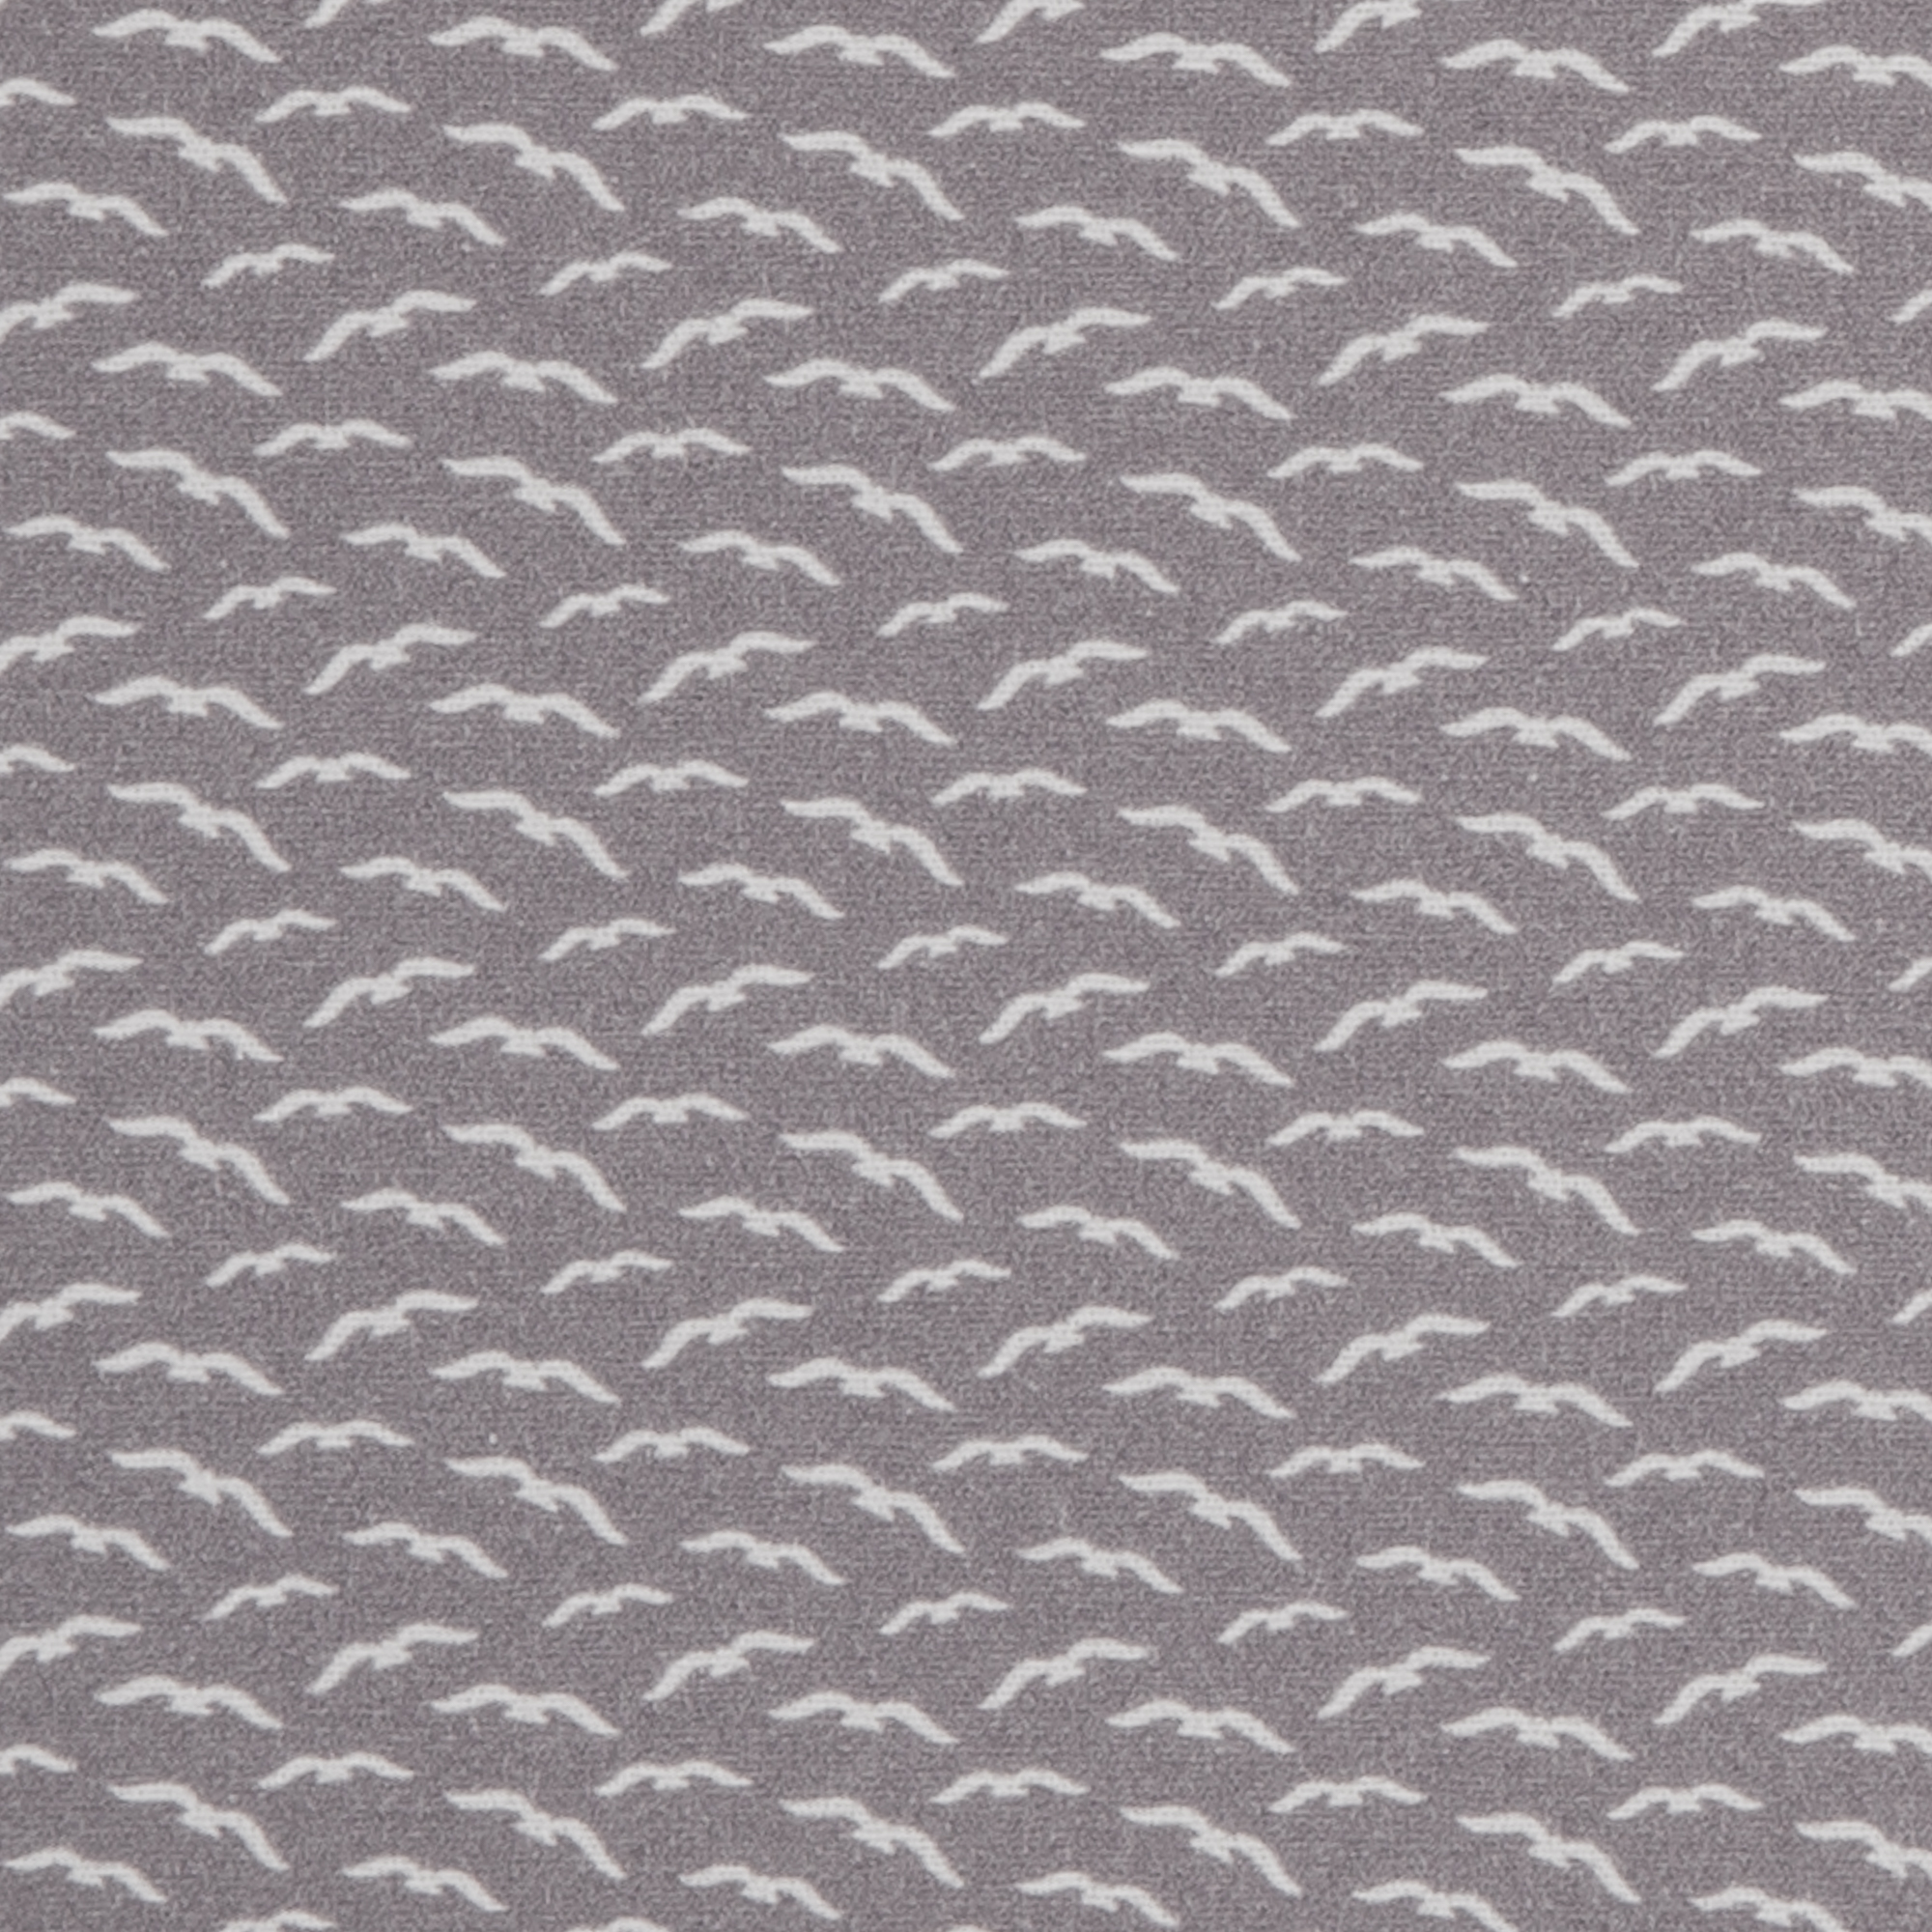 Maritime - Seagulls - gray-white